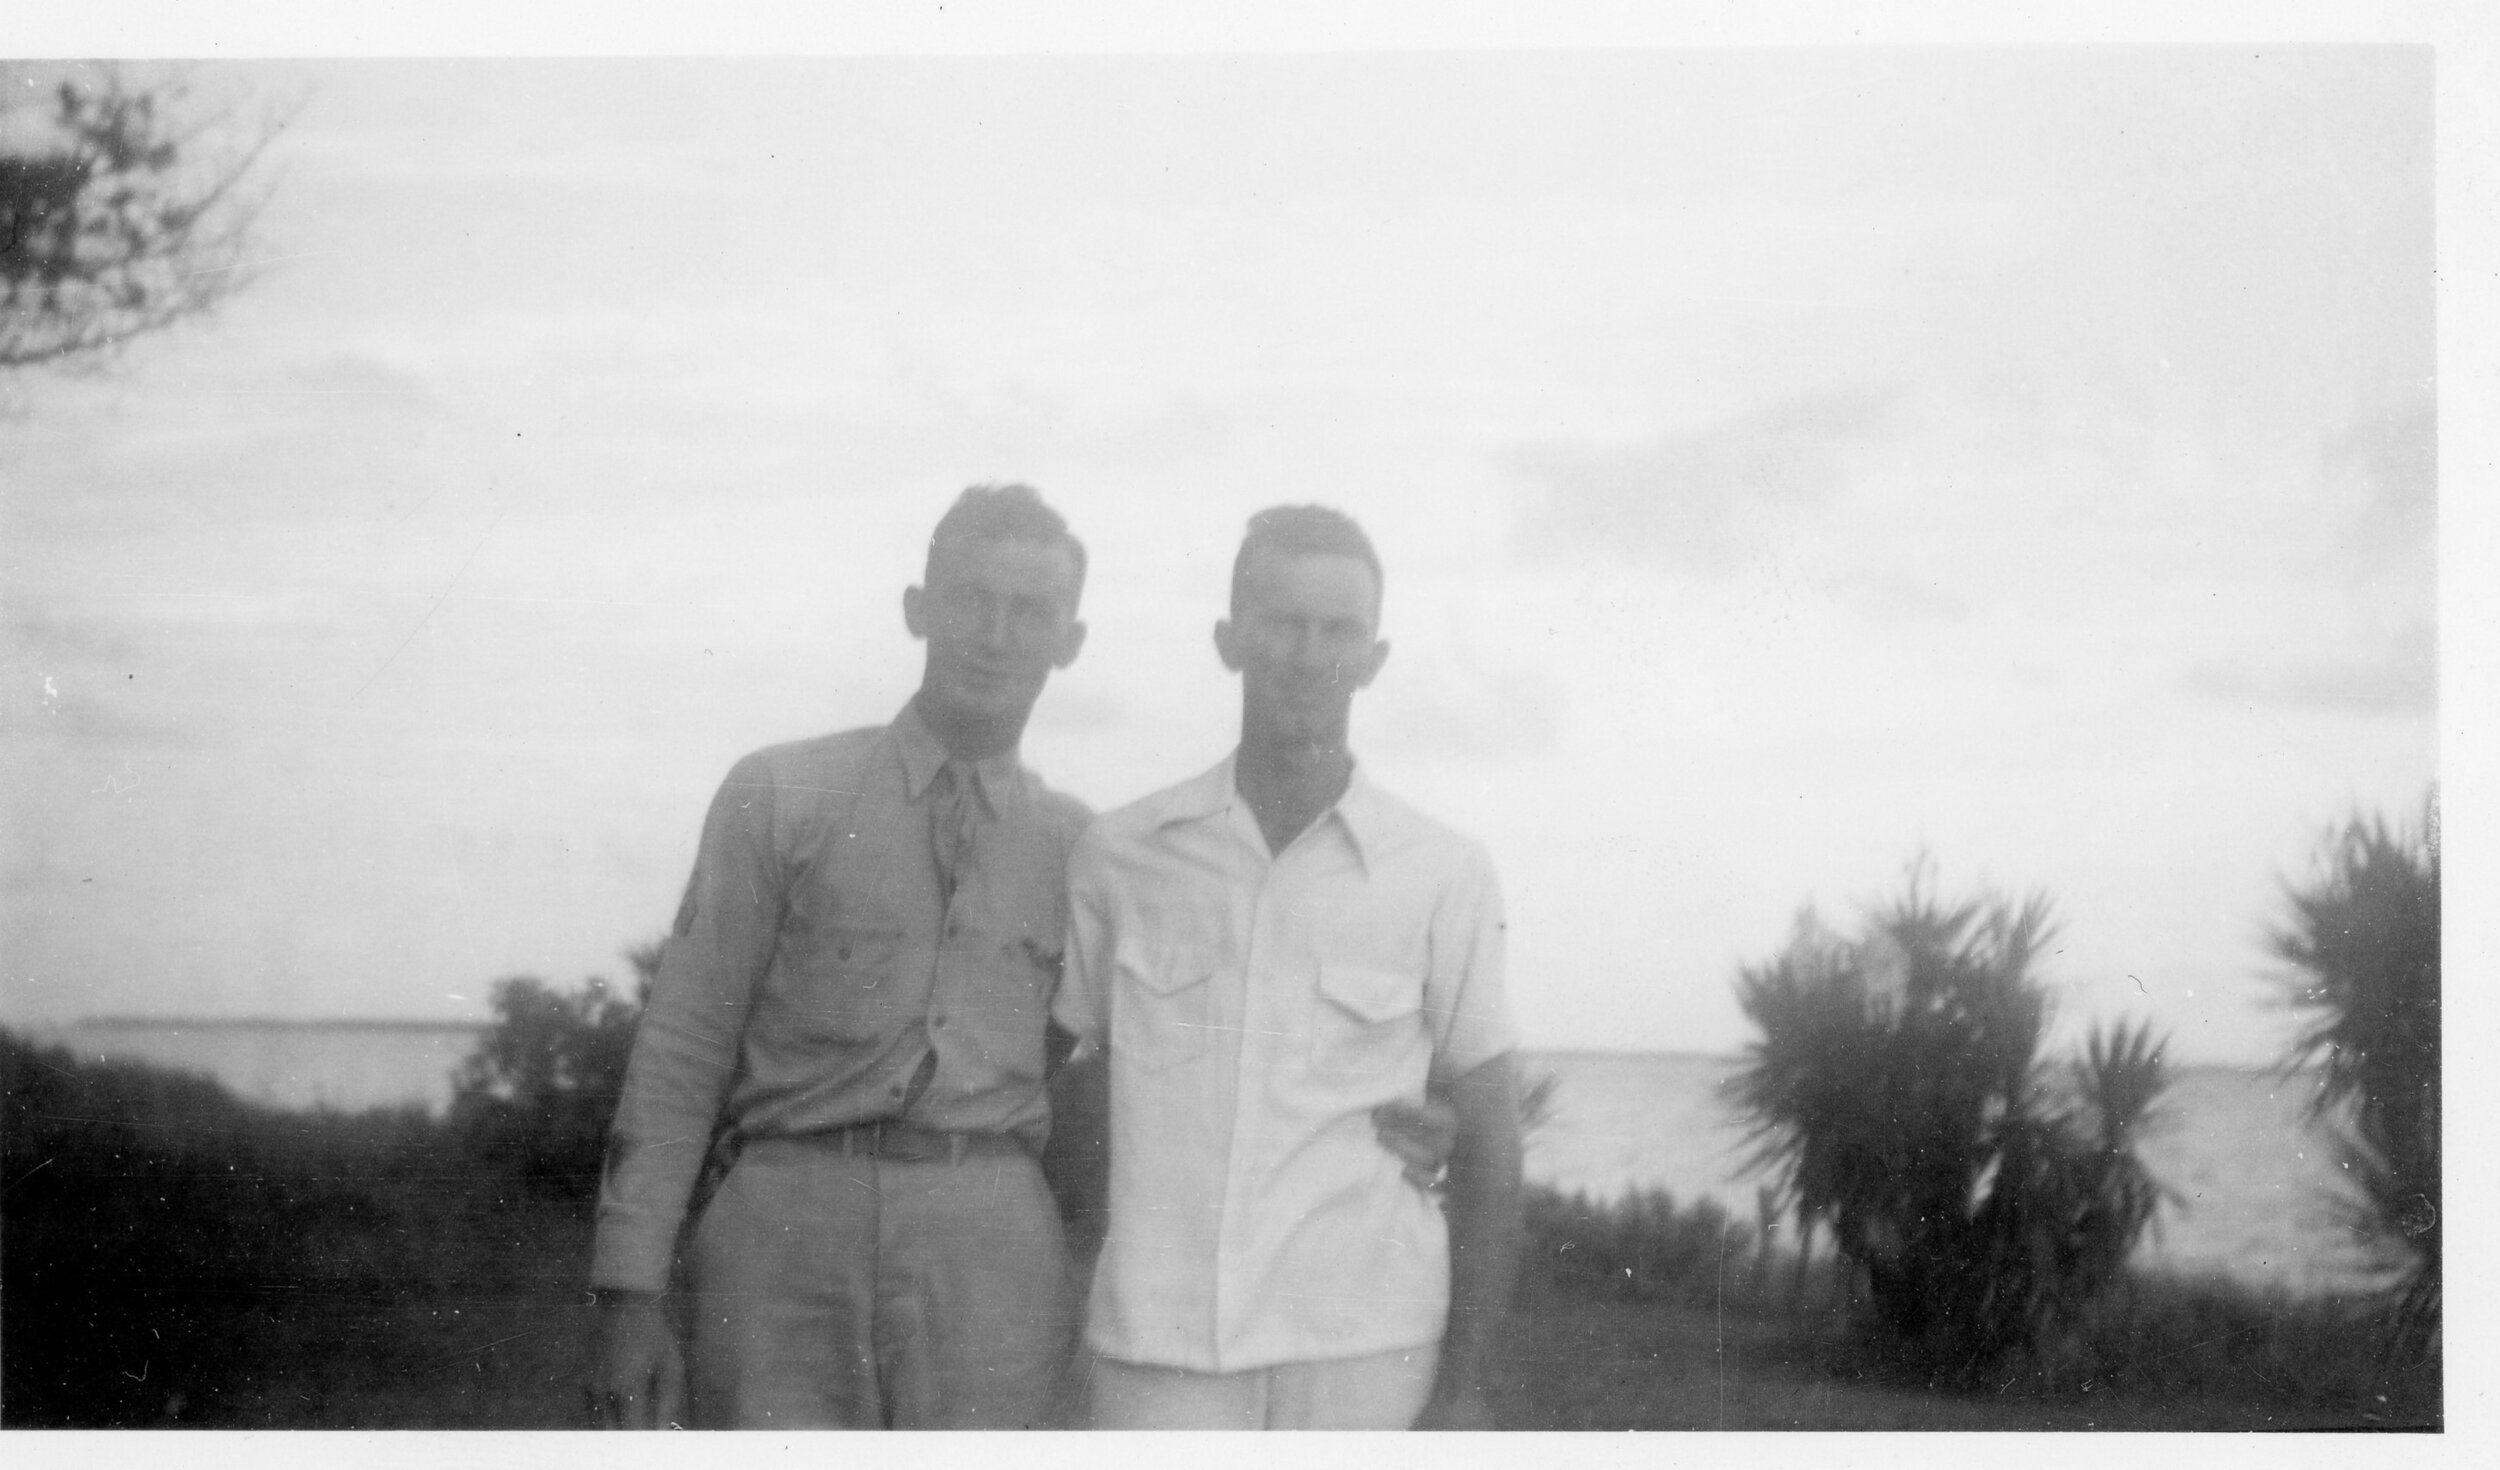 Vance Chadwick and his brother Paul Chadwick